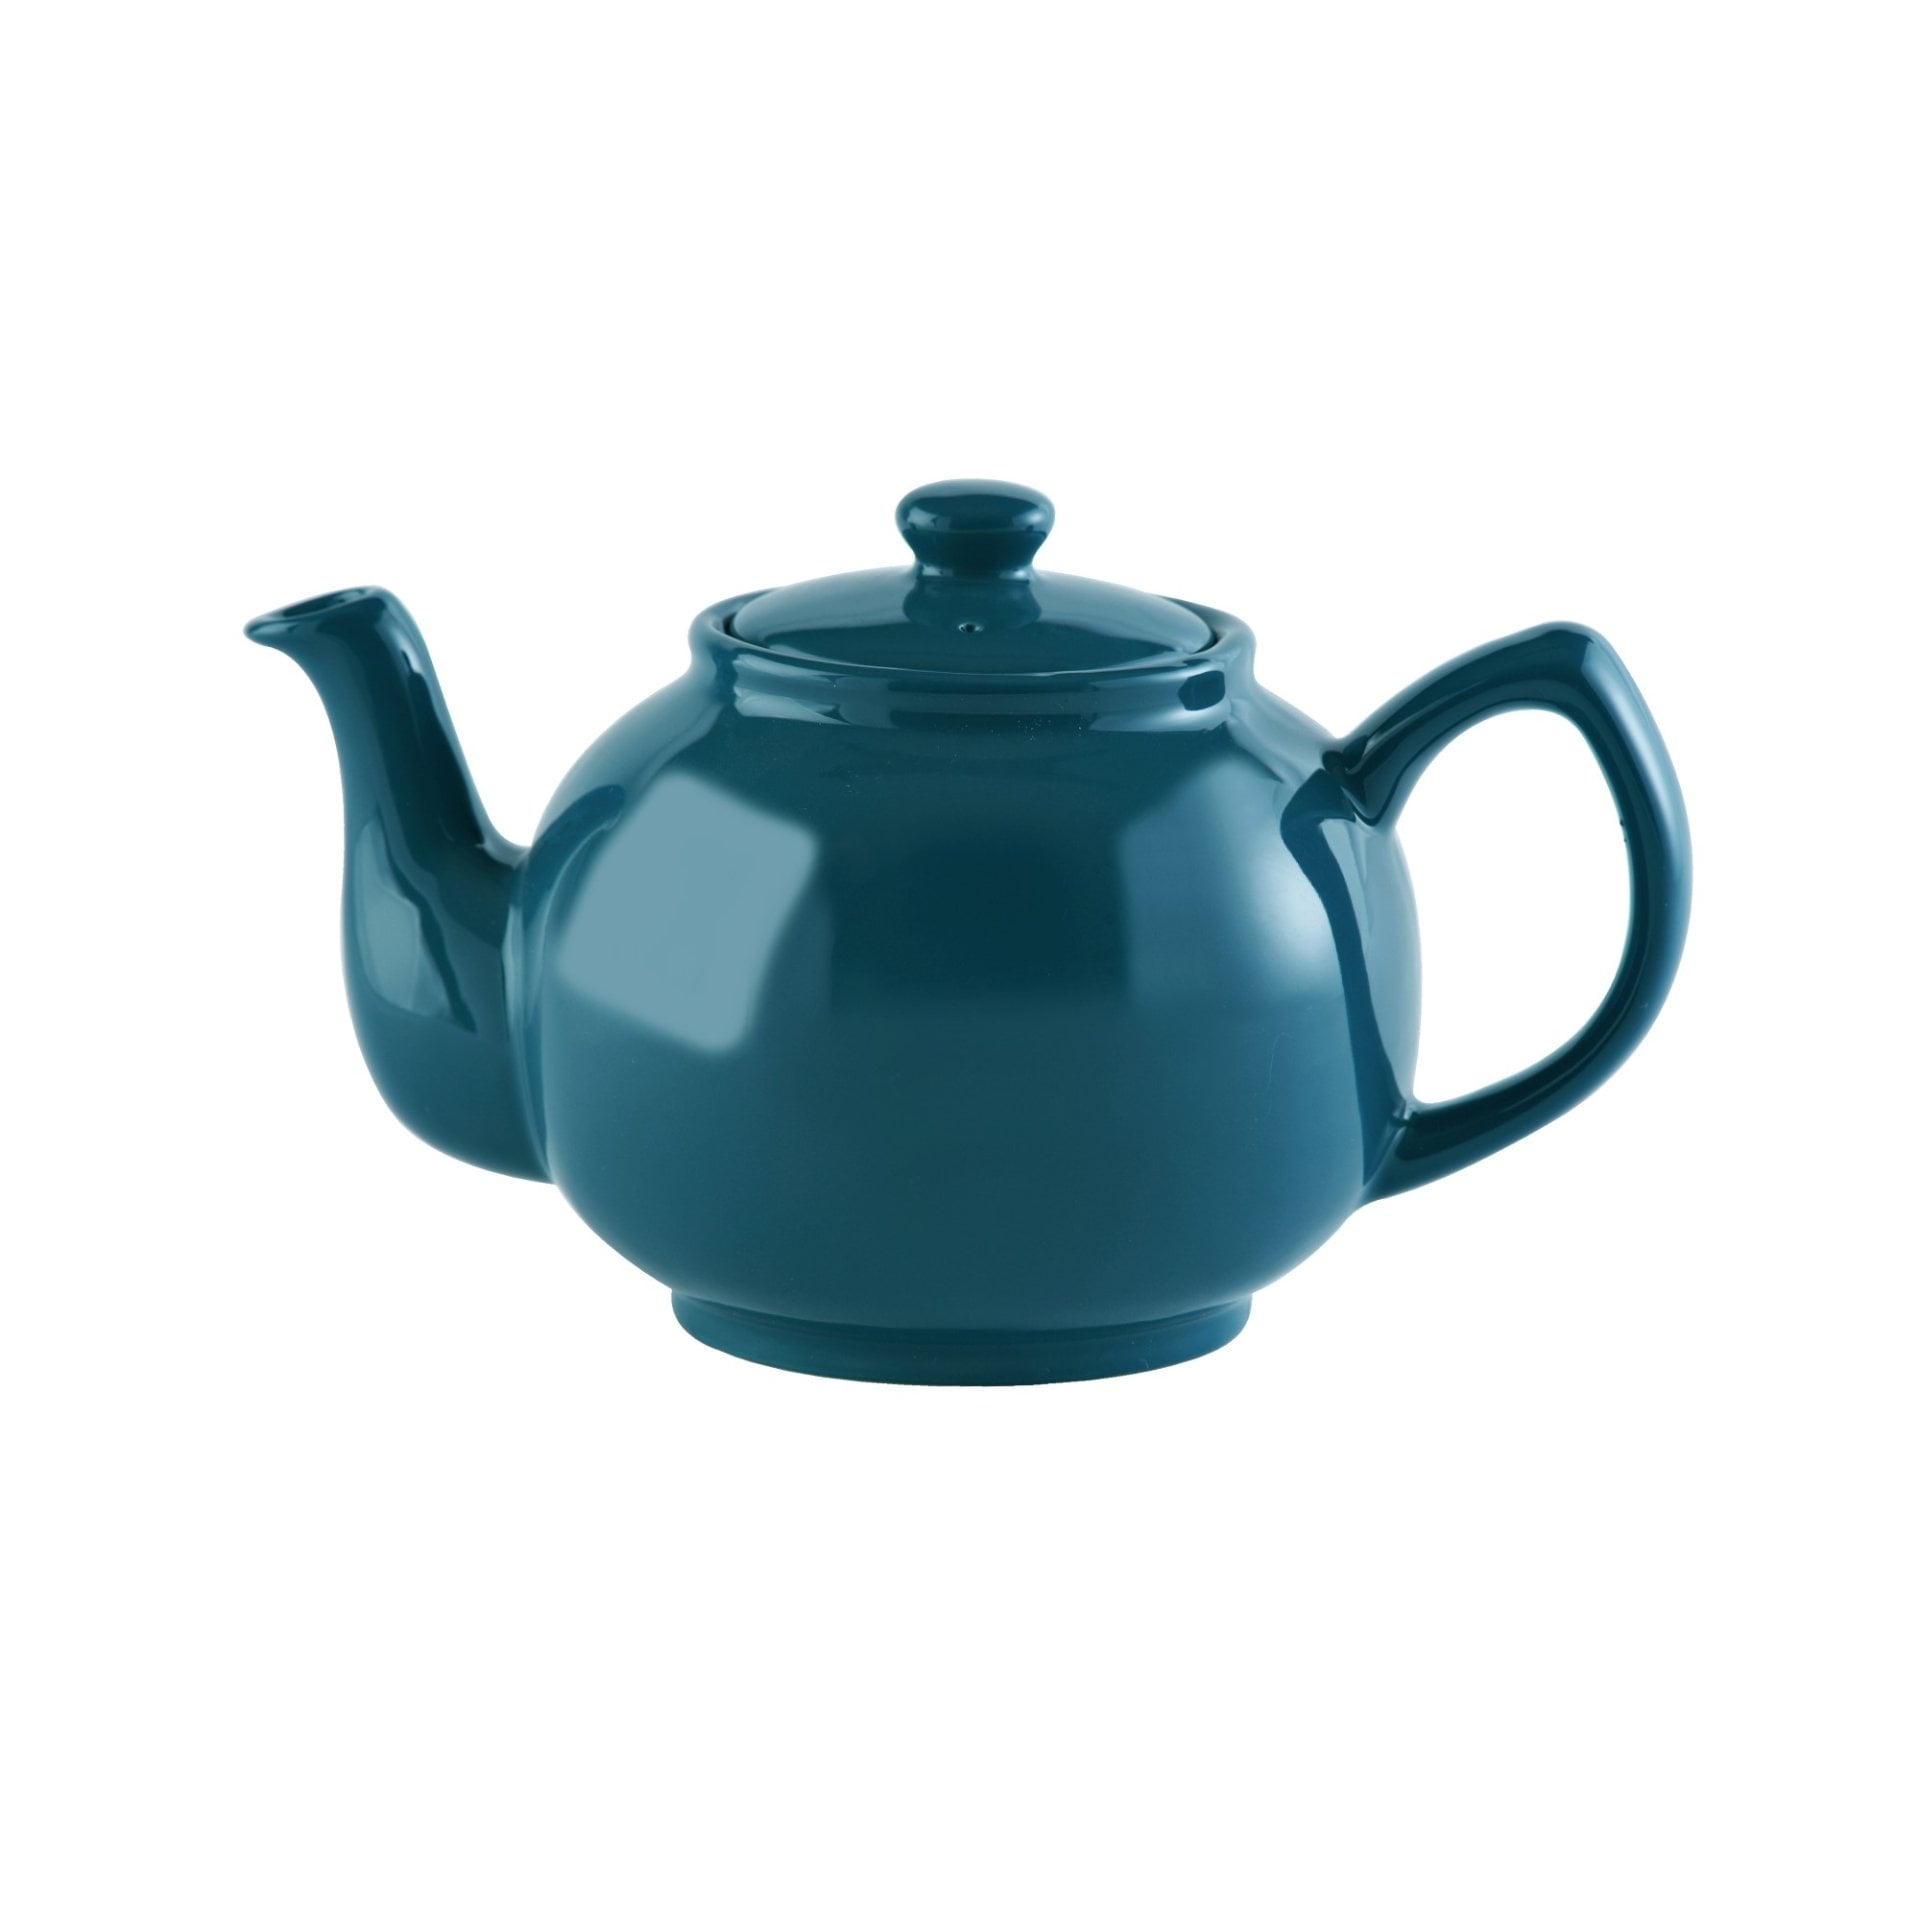 Price & Kensington Brights Teal Blue 6 Cup Teapot 